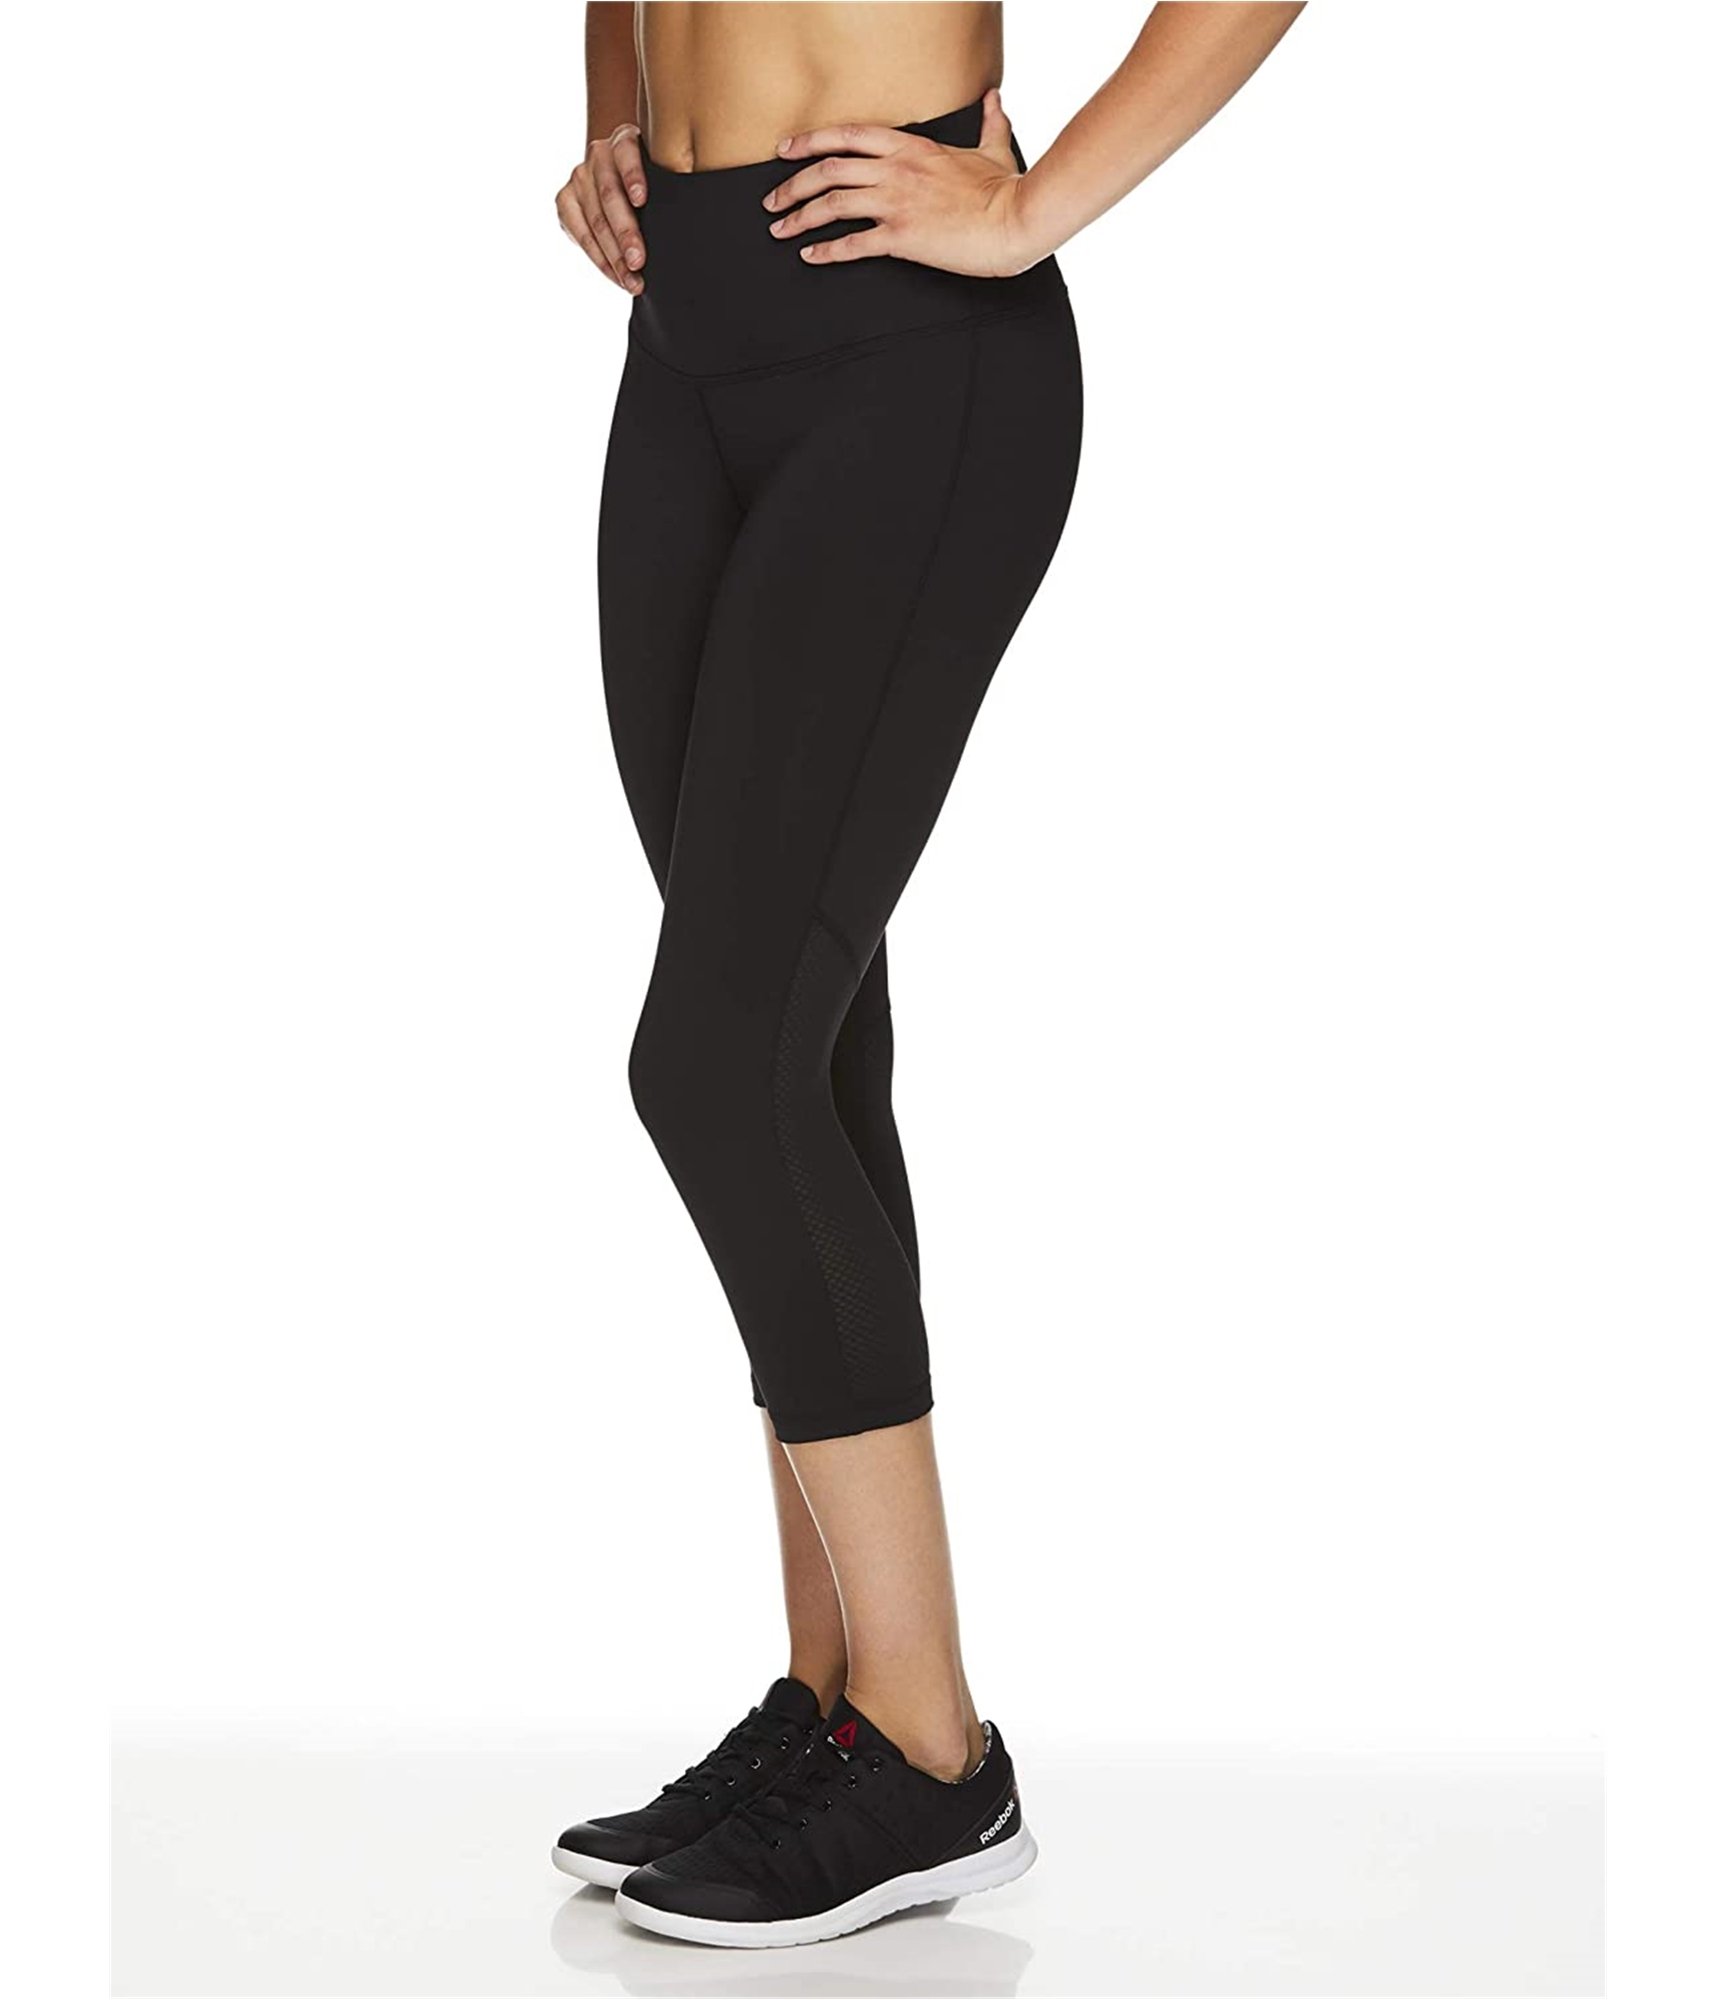 Buy a Reebok Womens Capri Seamed Compression Athletic Pants